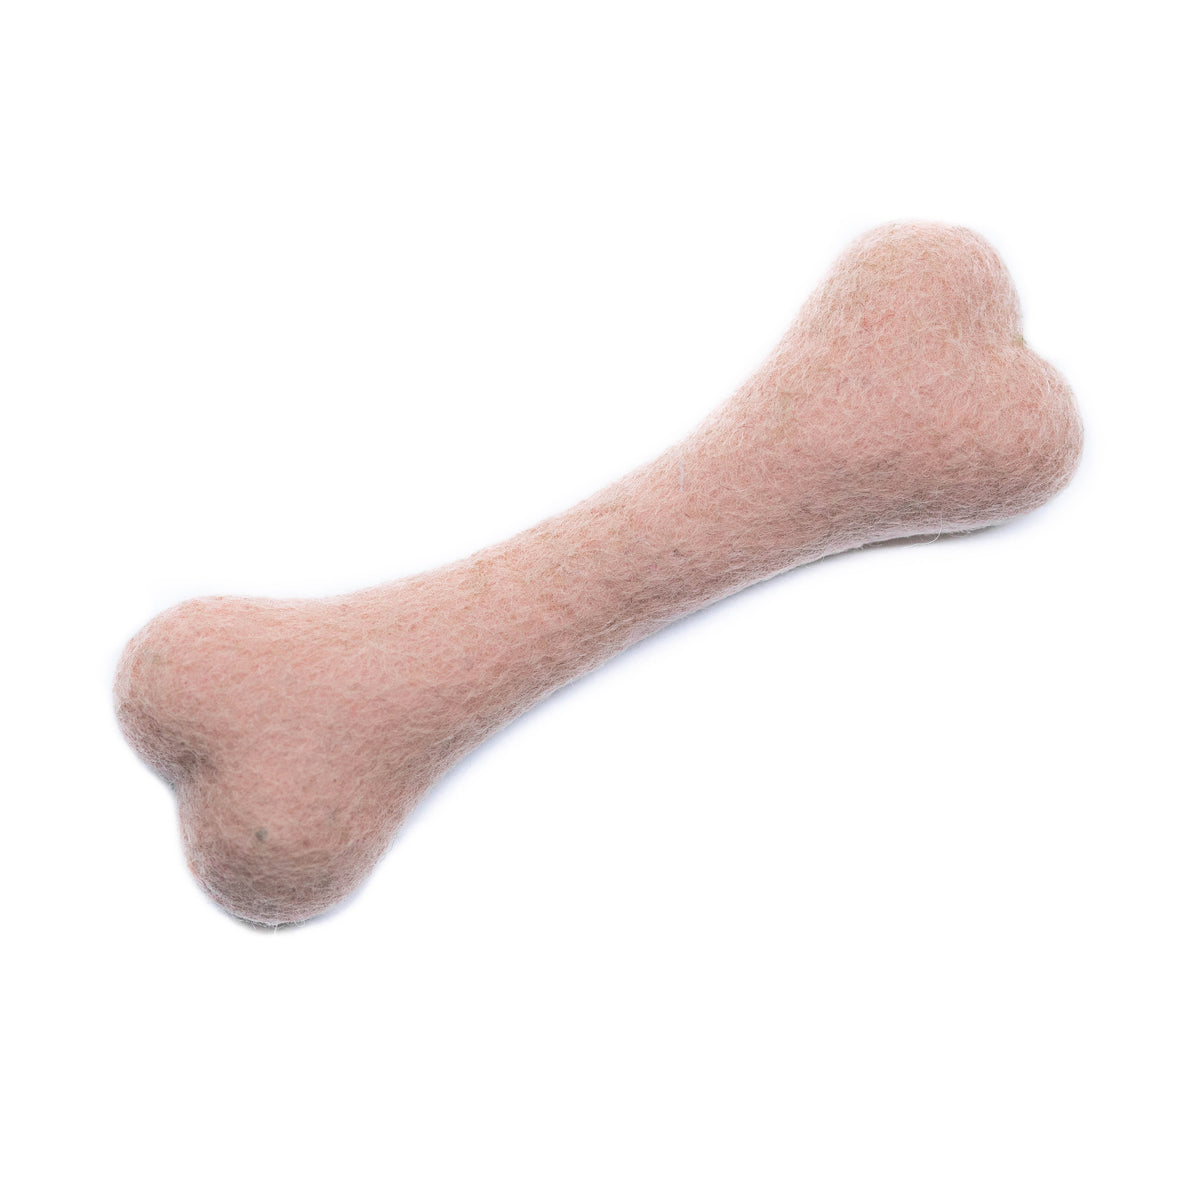 Wool Dog Bone Toy - Blush